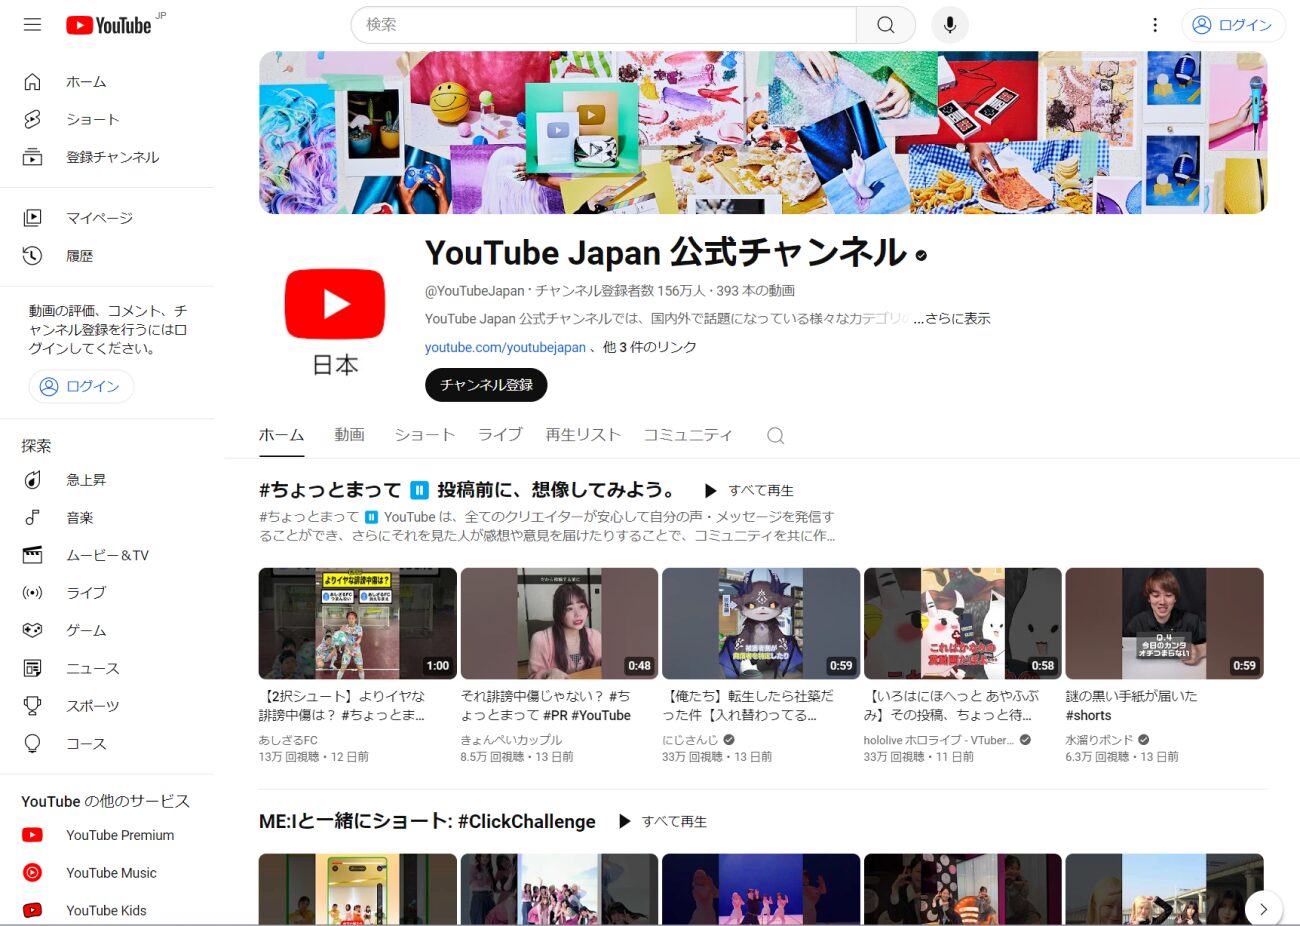 YouTubeの画面